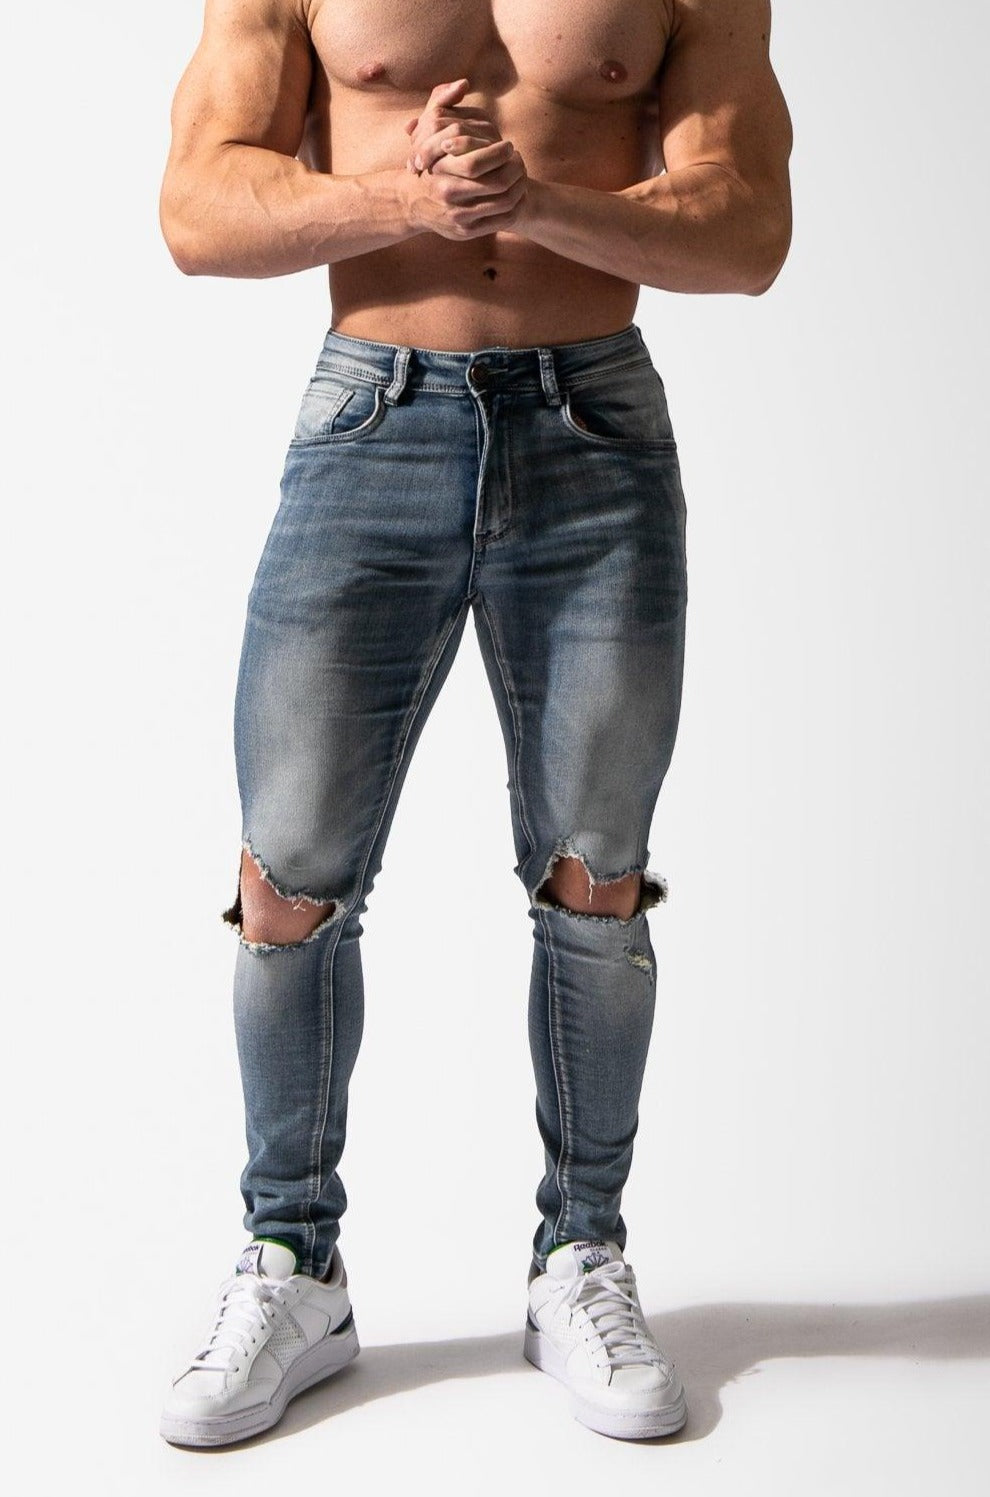 Denim Jeans for Men, Bodybuilding Fitness & Casual Wear